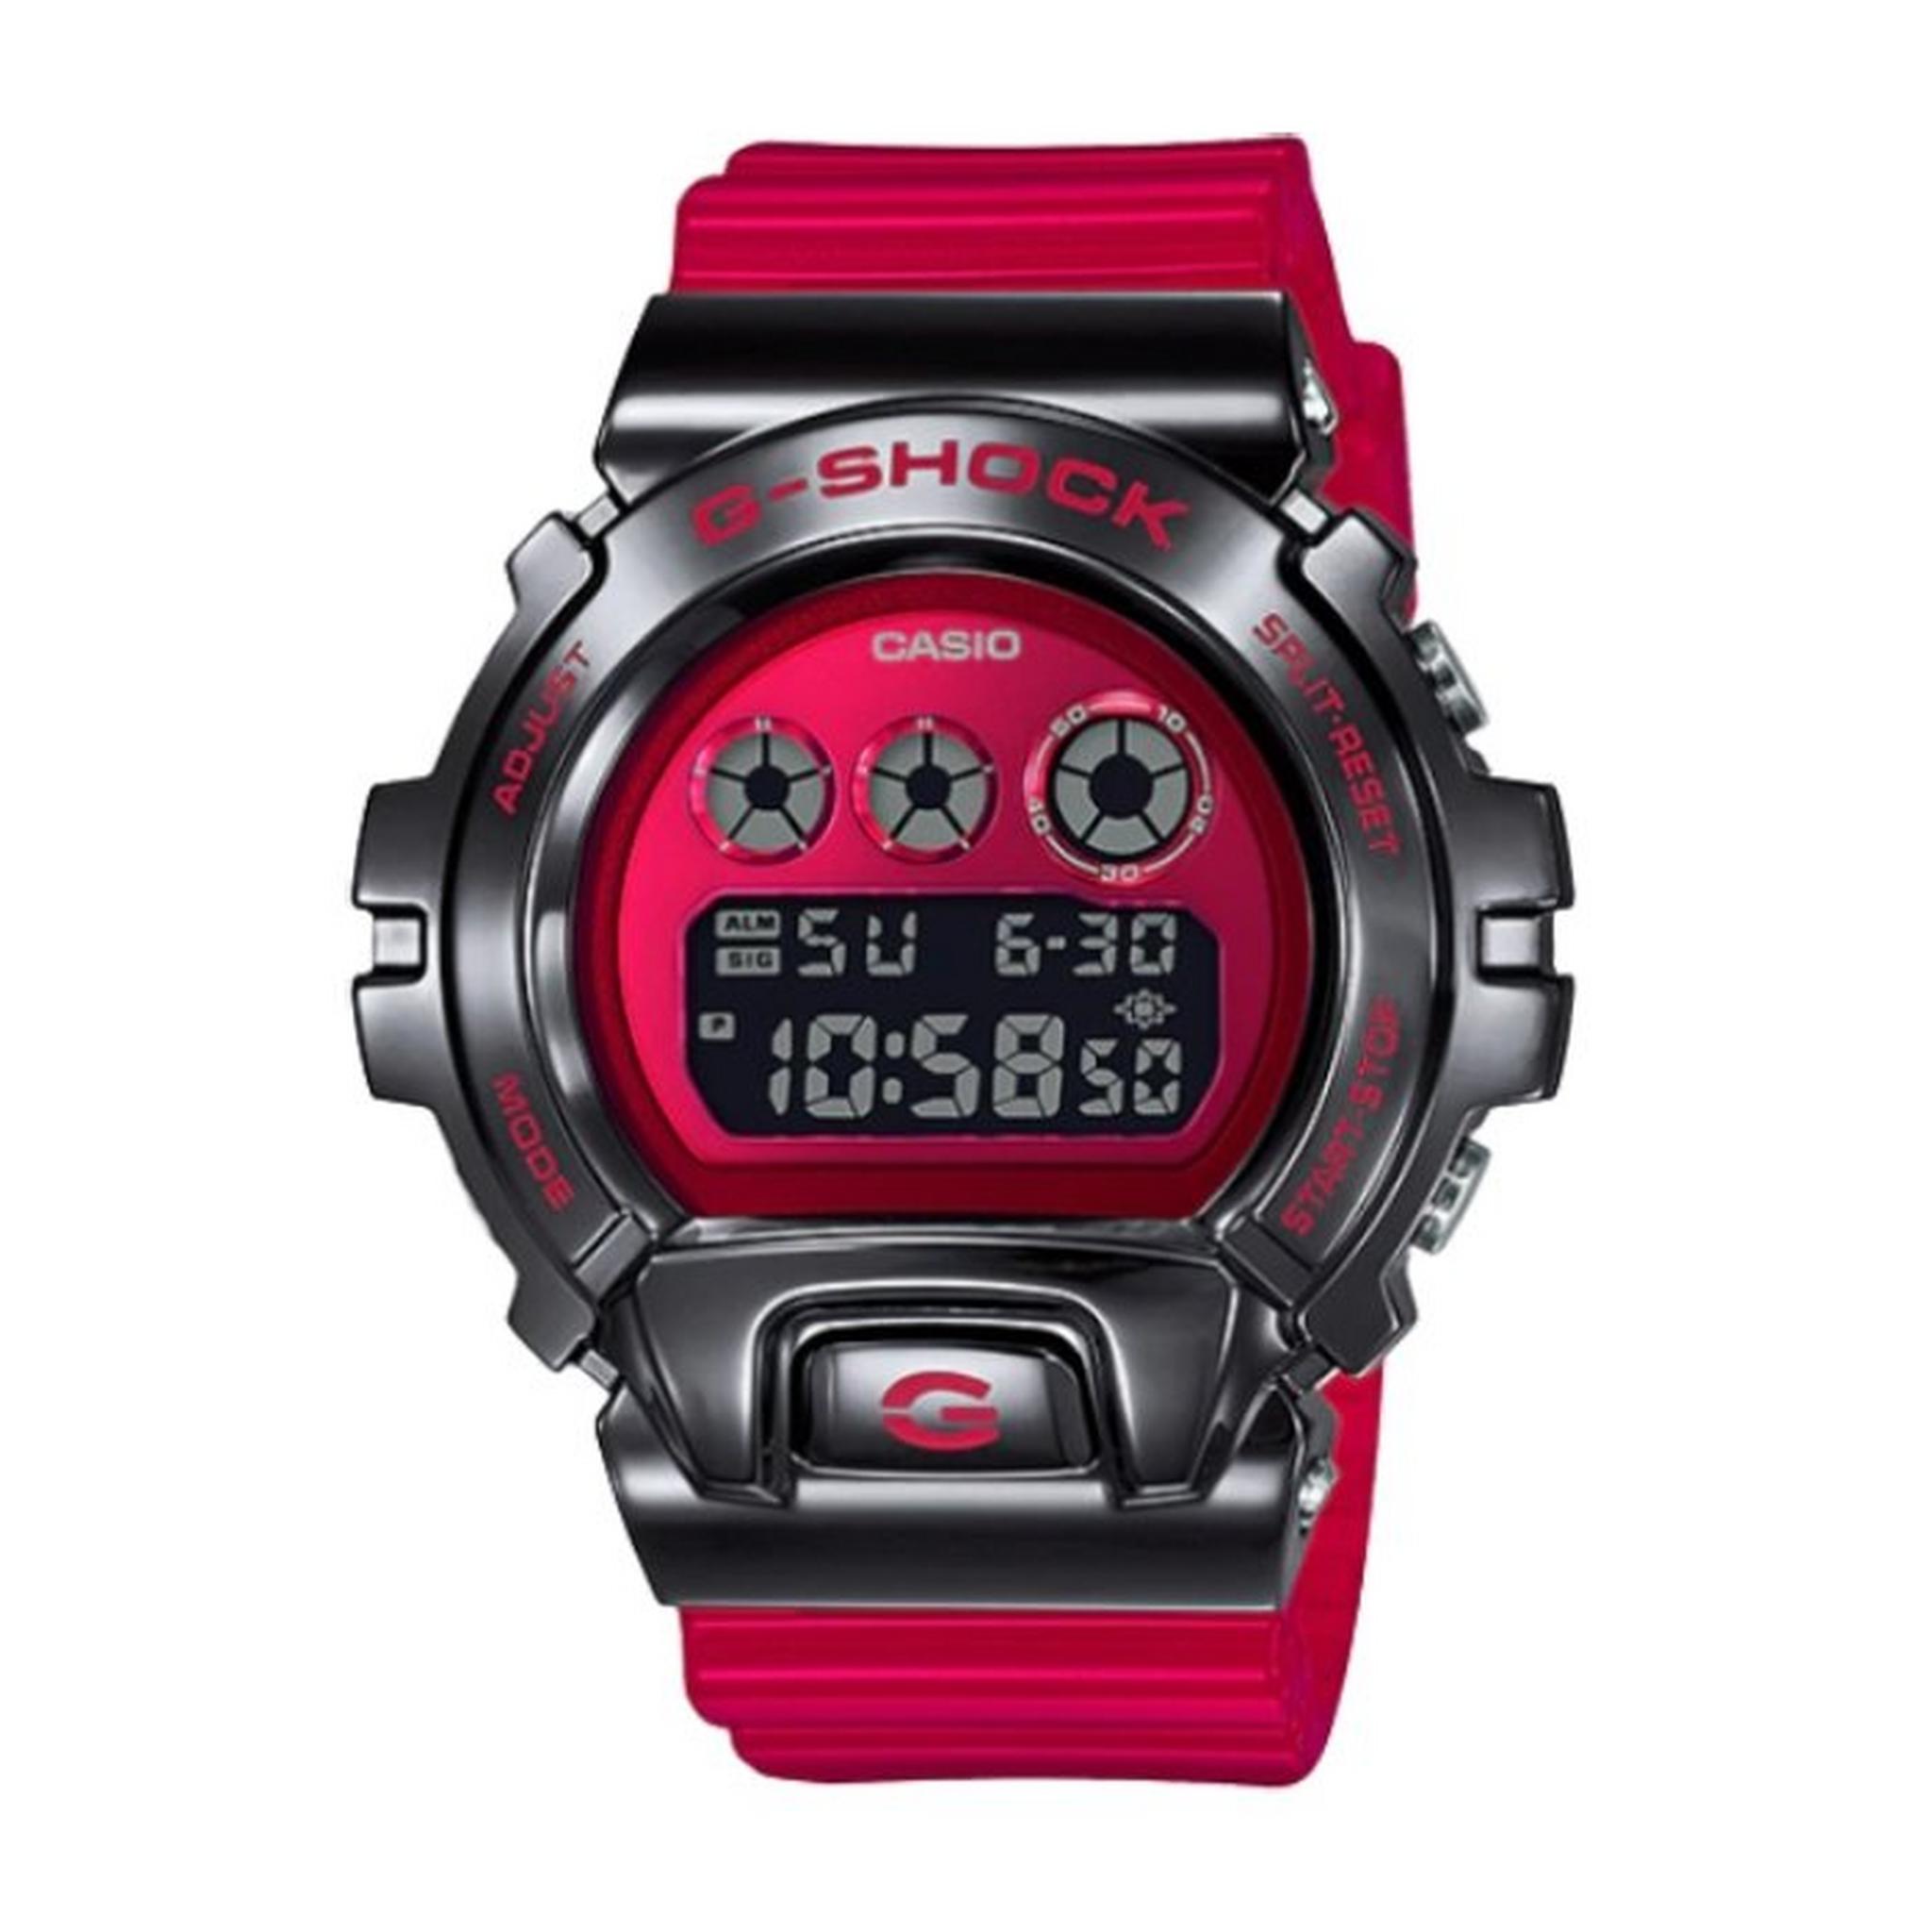 Casio G-Shock Men's Digital Watch (GM-6900B-4DR)